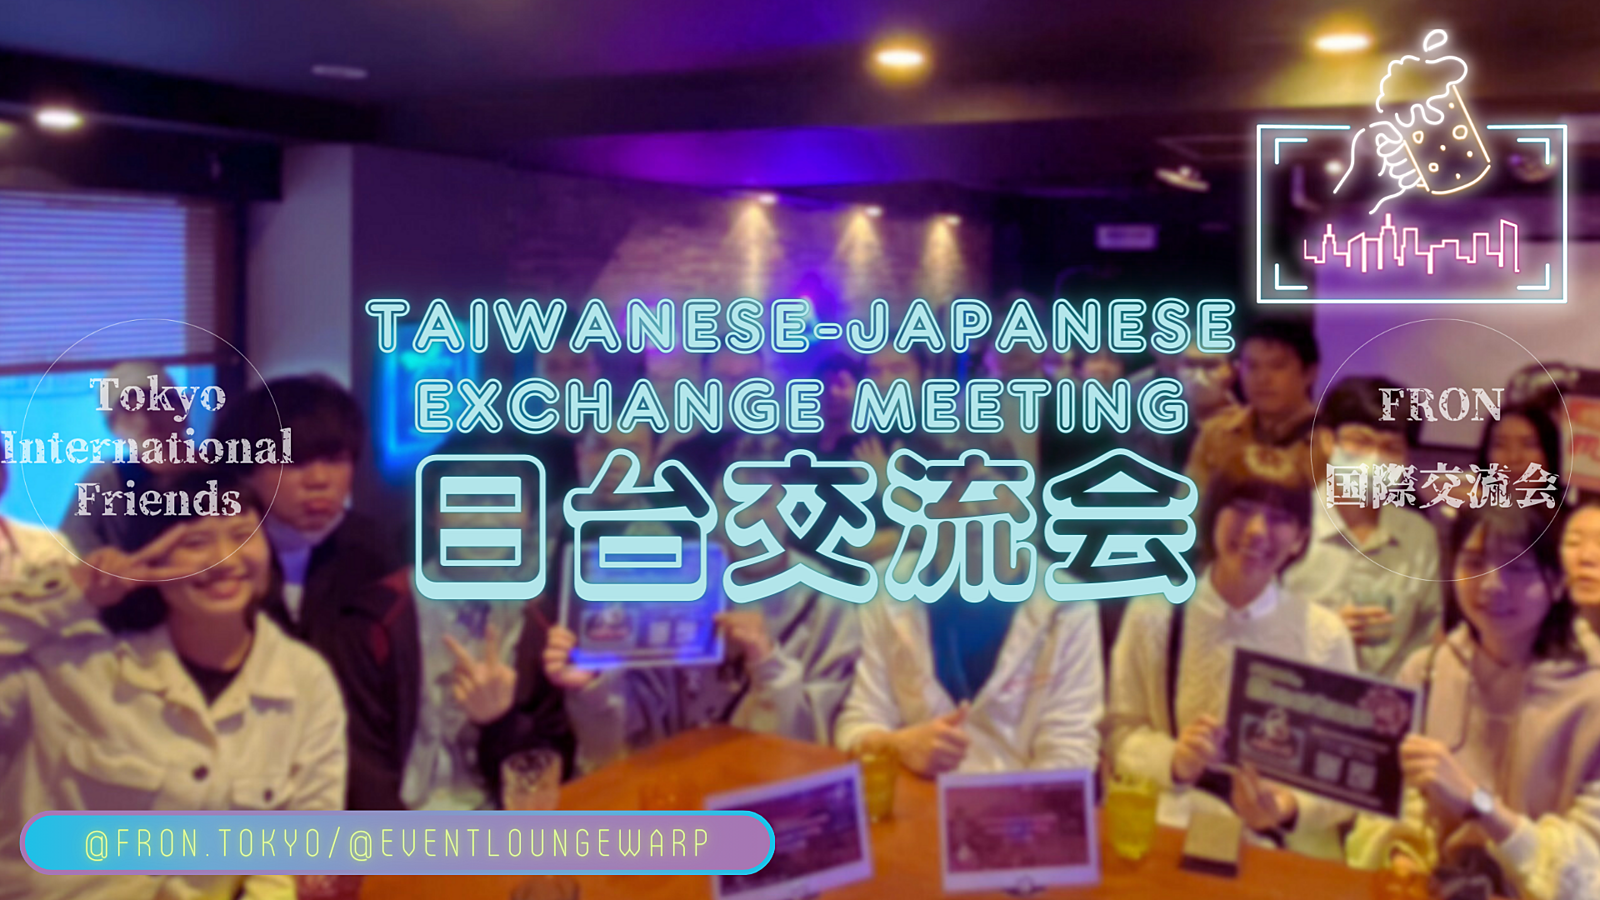  4/14(日)14:00~ 日台交流會 🇹🇼 Taiwanese-Japanese Exchange Meeting☆一起加油！